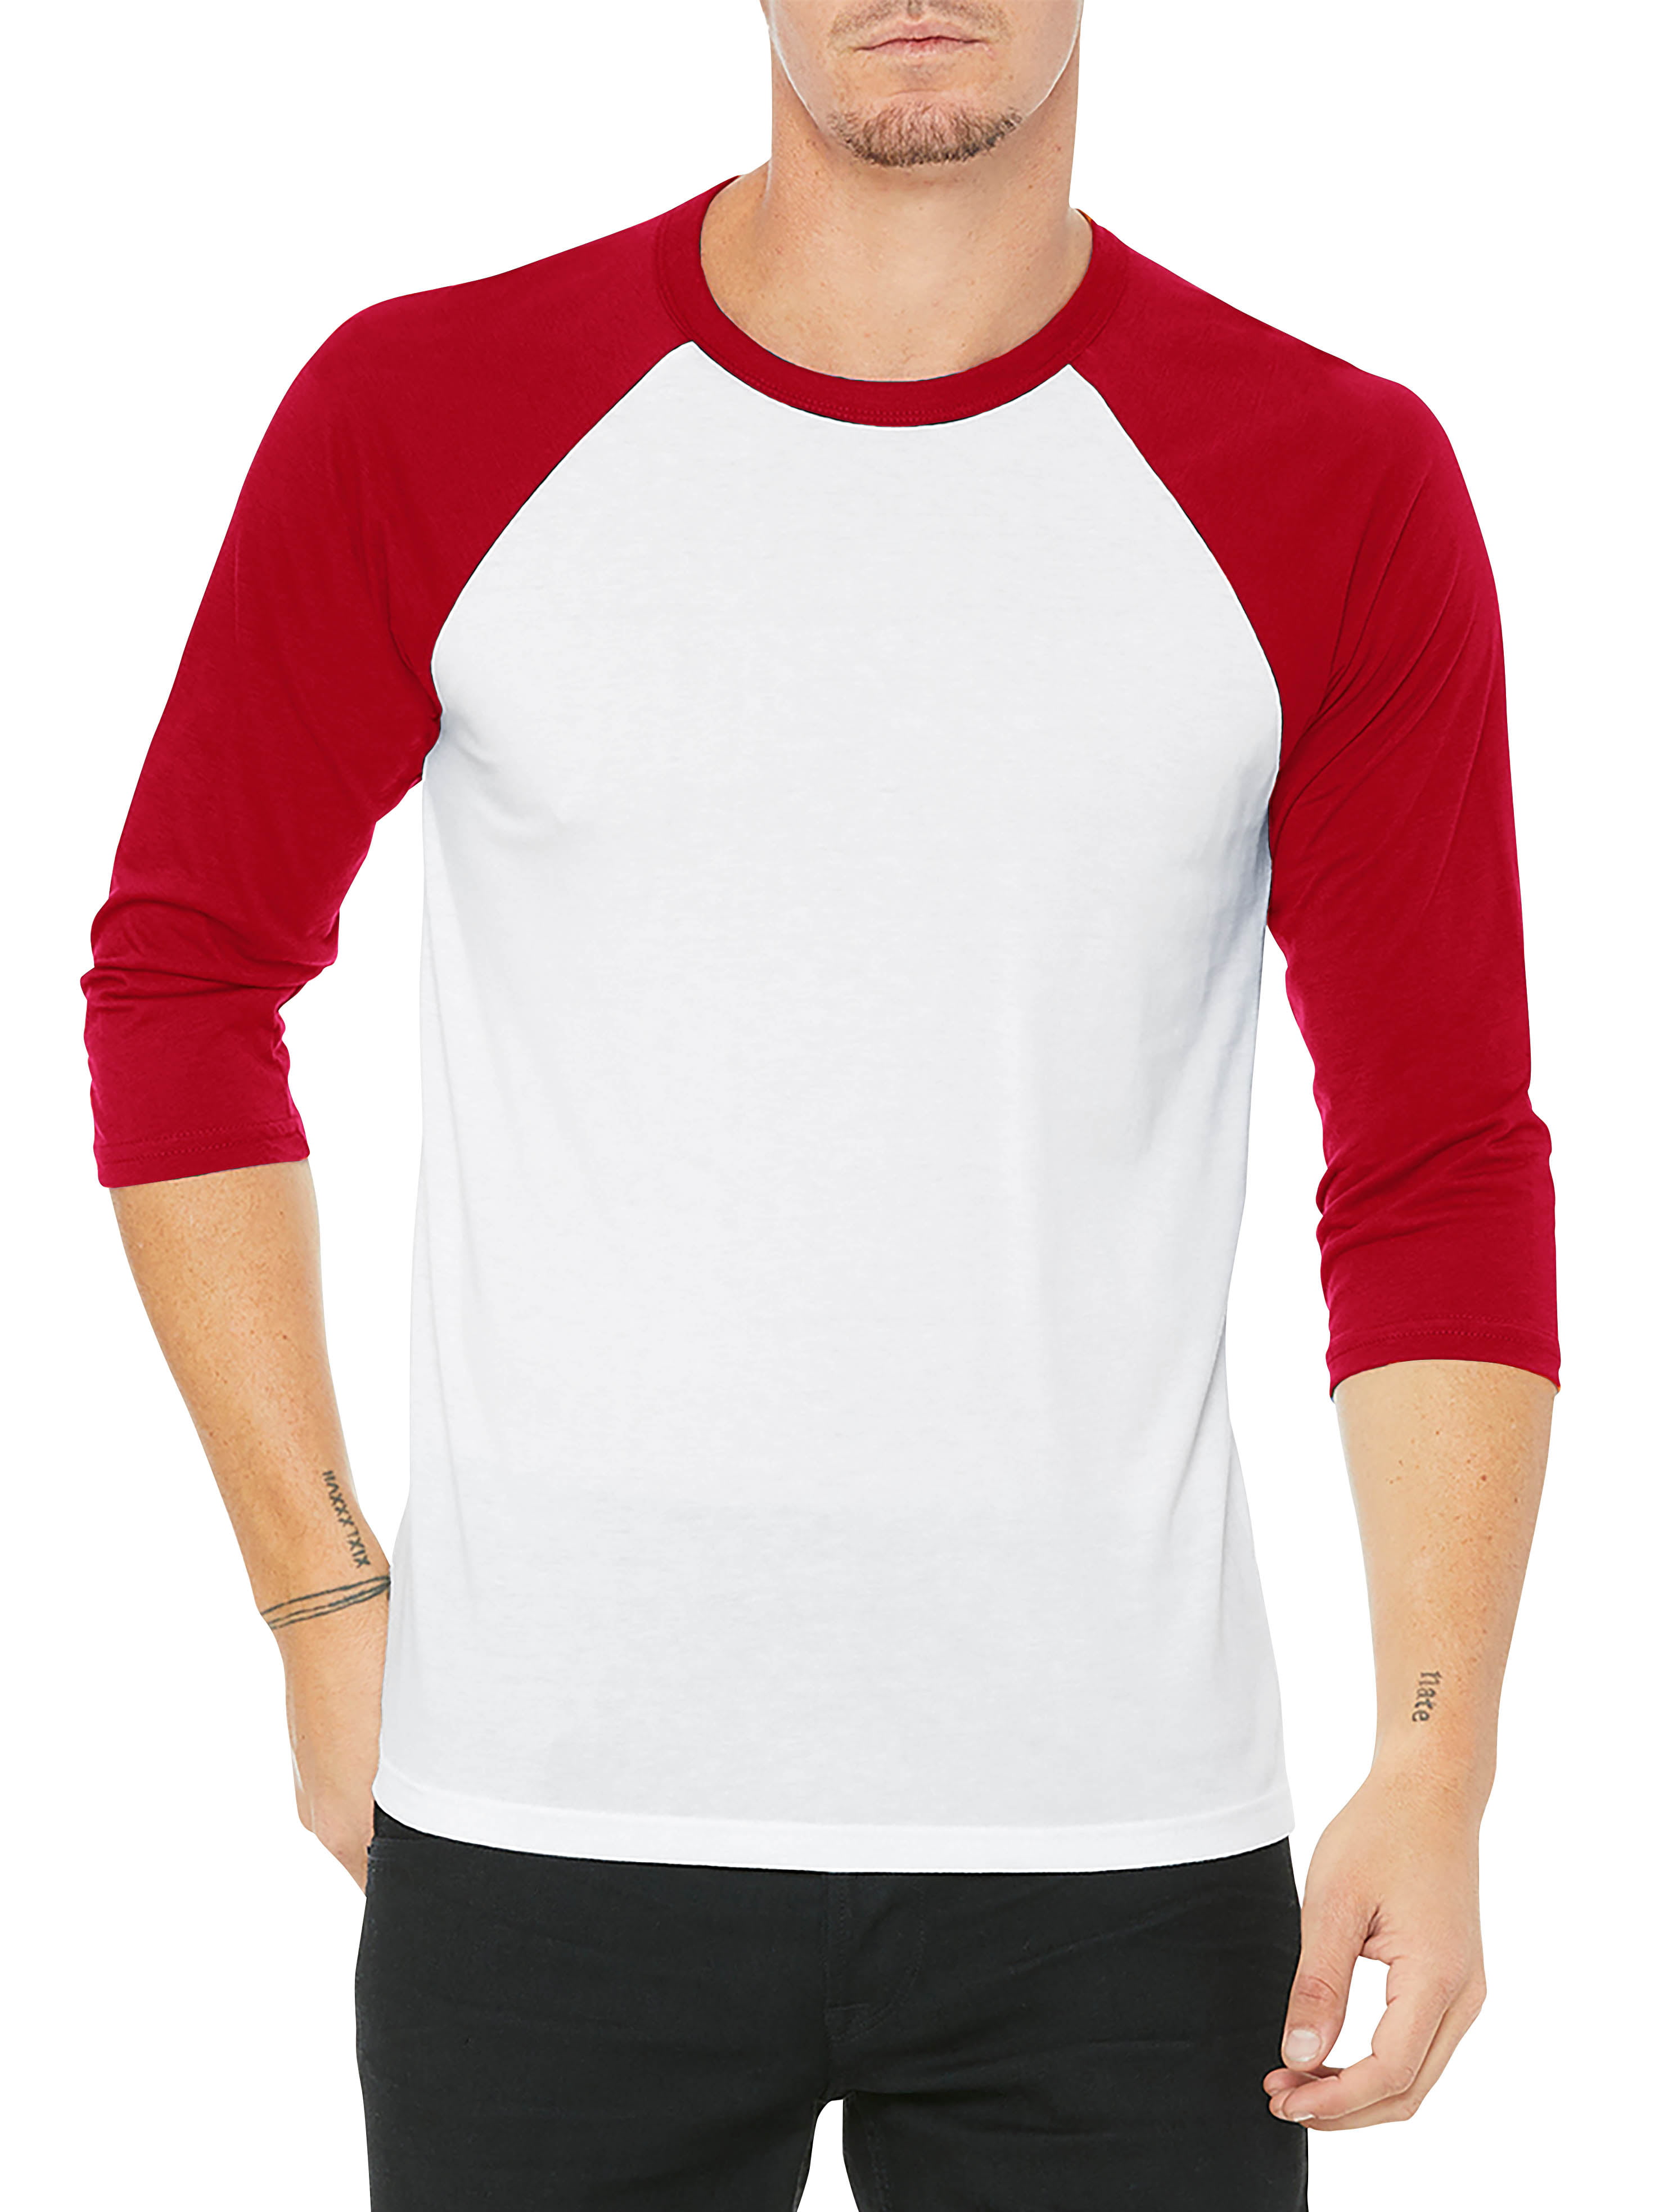 shirts Team Sports Jersey Tee  S~3XL Raglan 3/4 Sleeve Cotton Plain Baseball T